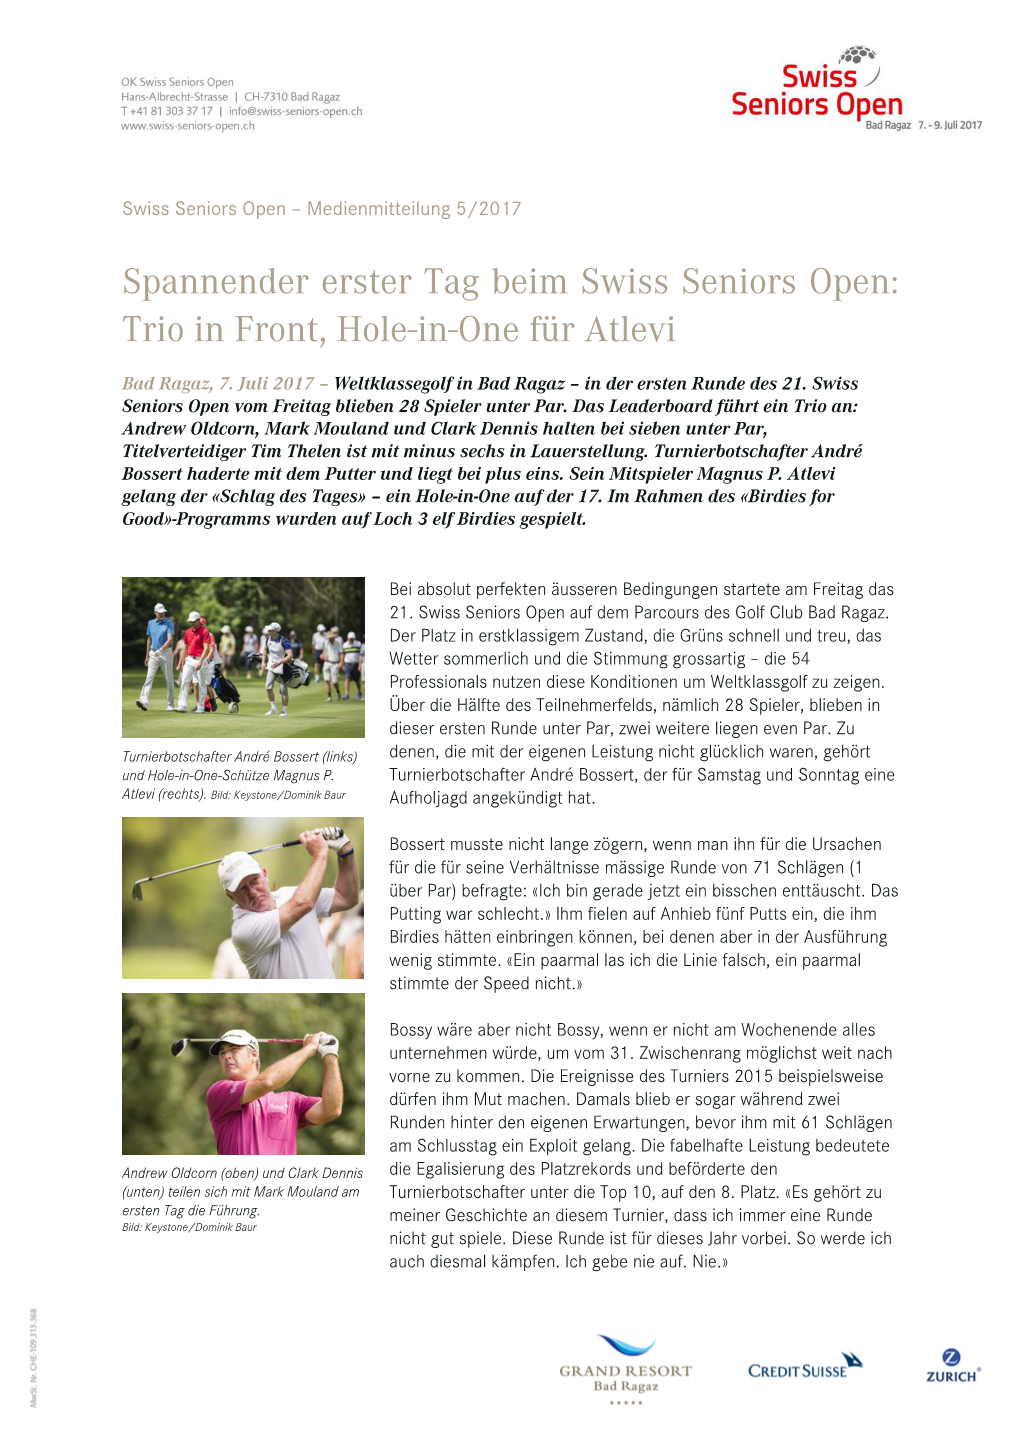 Spannender Erster Tag Beim Swiss Seniors Open: Trio in Front, Hole-In-One Für Atlevi